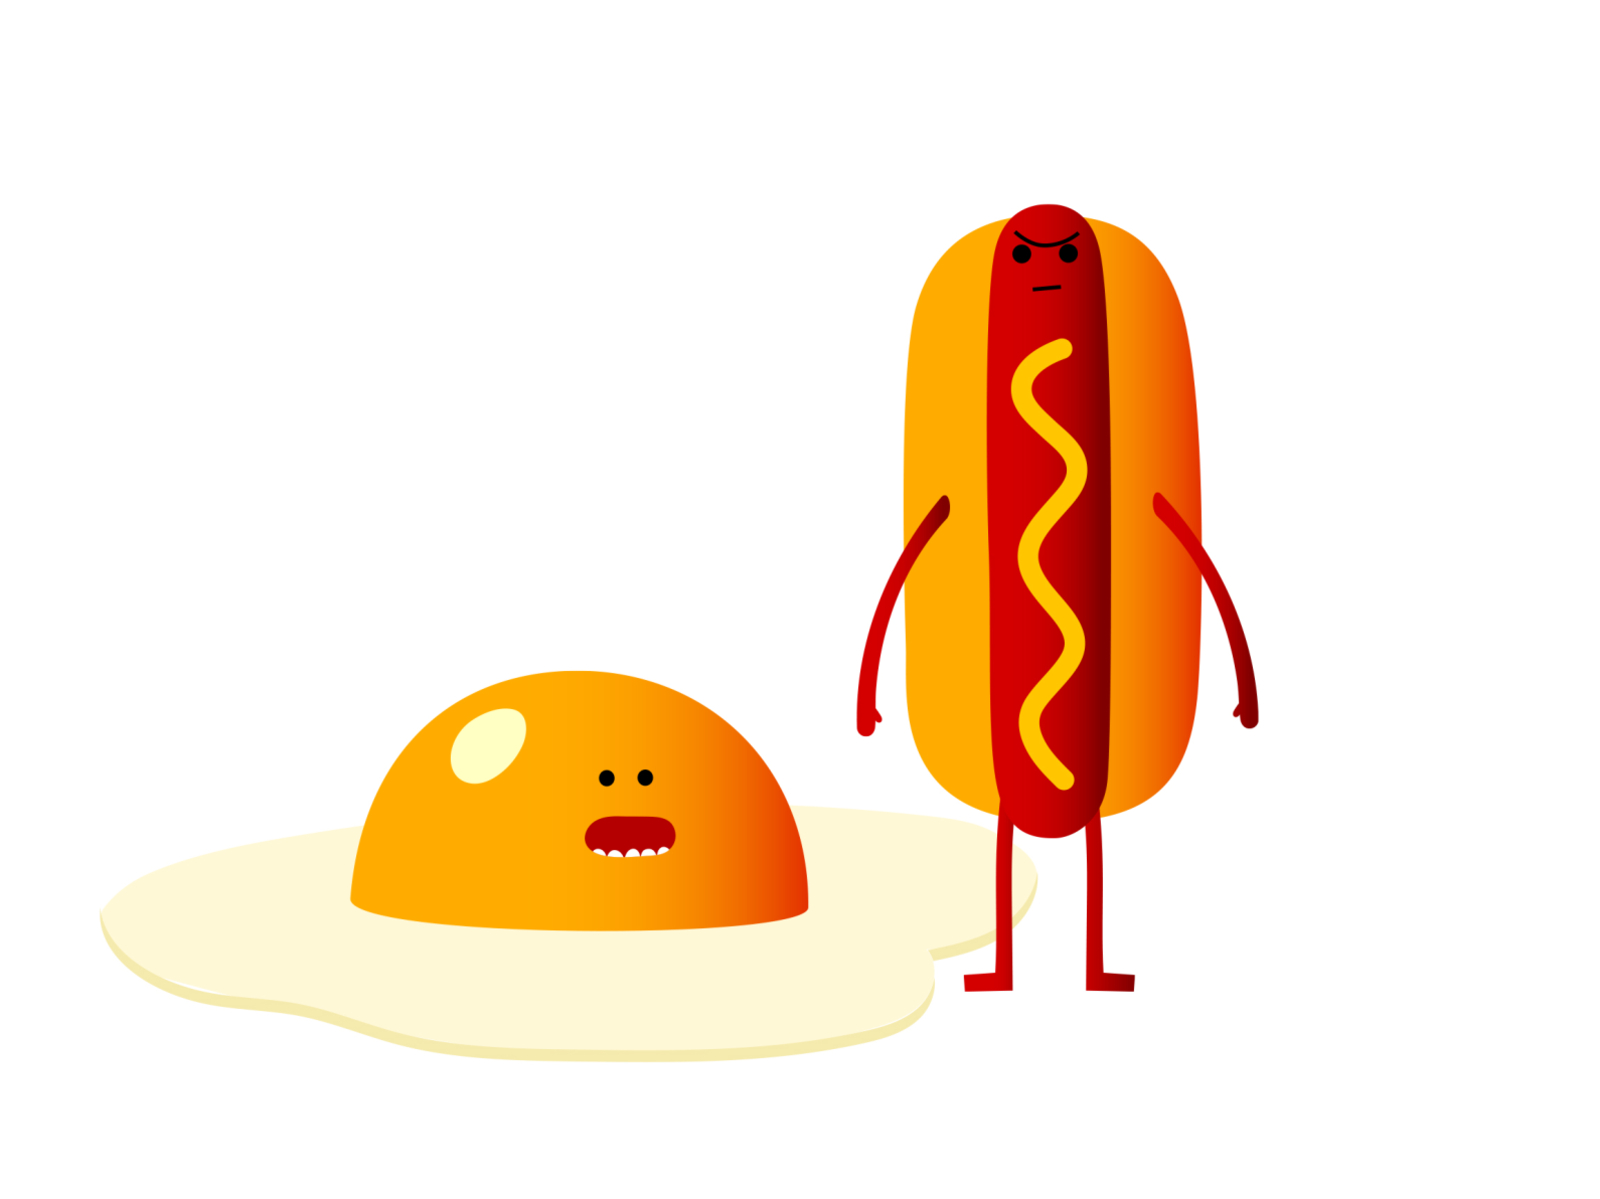 furious fast food health nutrition egg food hotdog colour fantasy dribbble mascot illustration design cartoon character